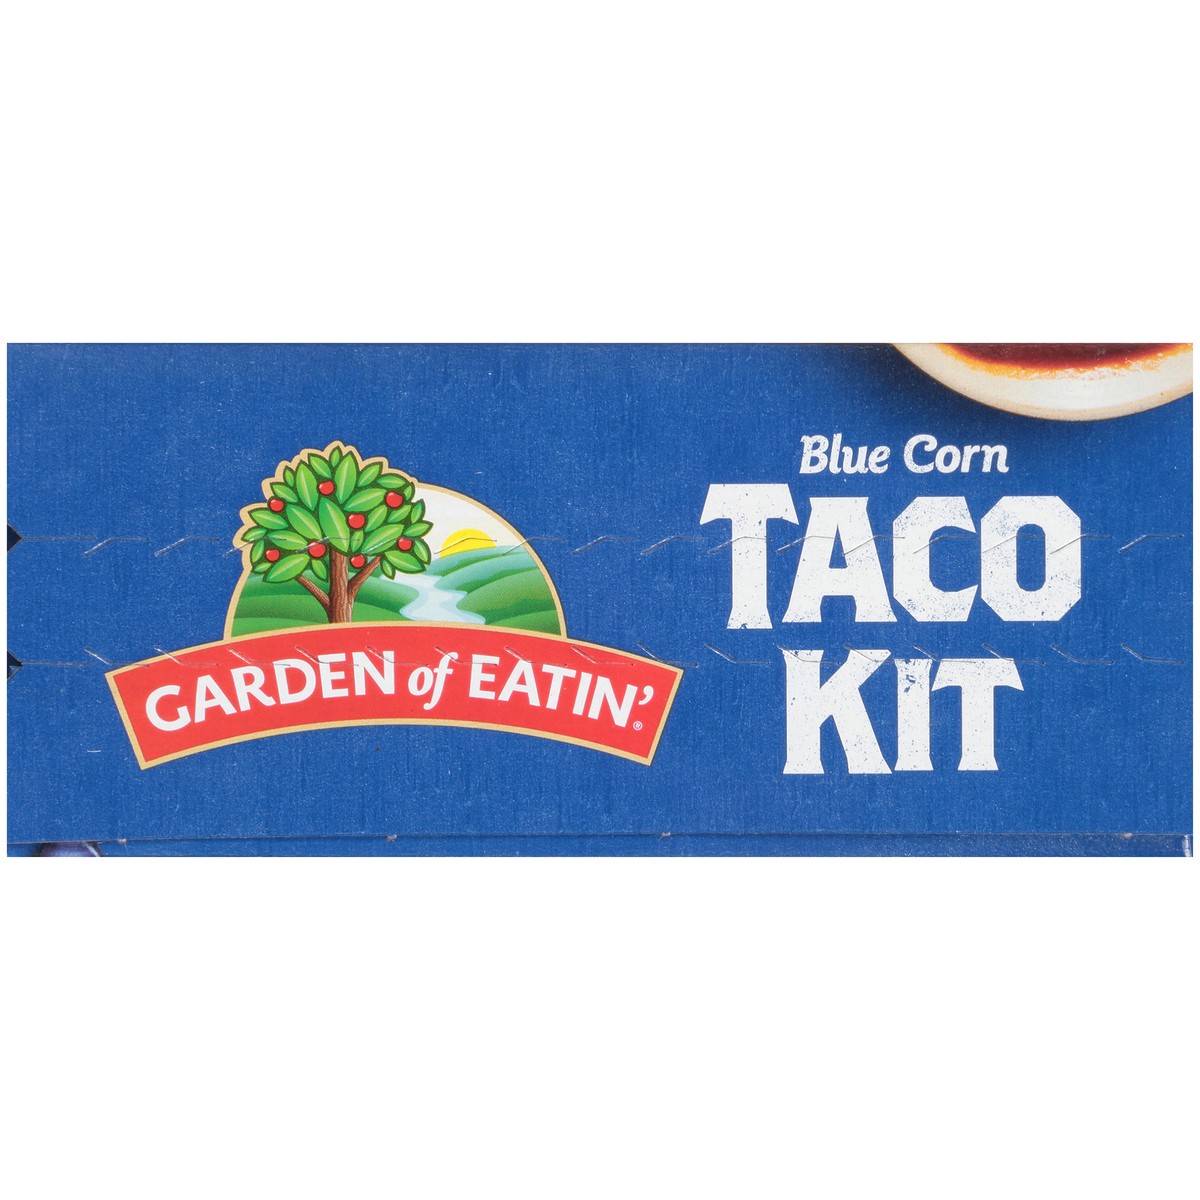 slide 7 of 8, Garden of Eatin' Blue Corn Taco Kit 9.4 oz. Box, 9.4 oz